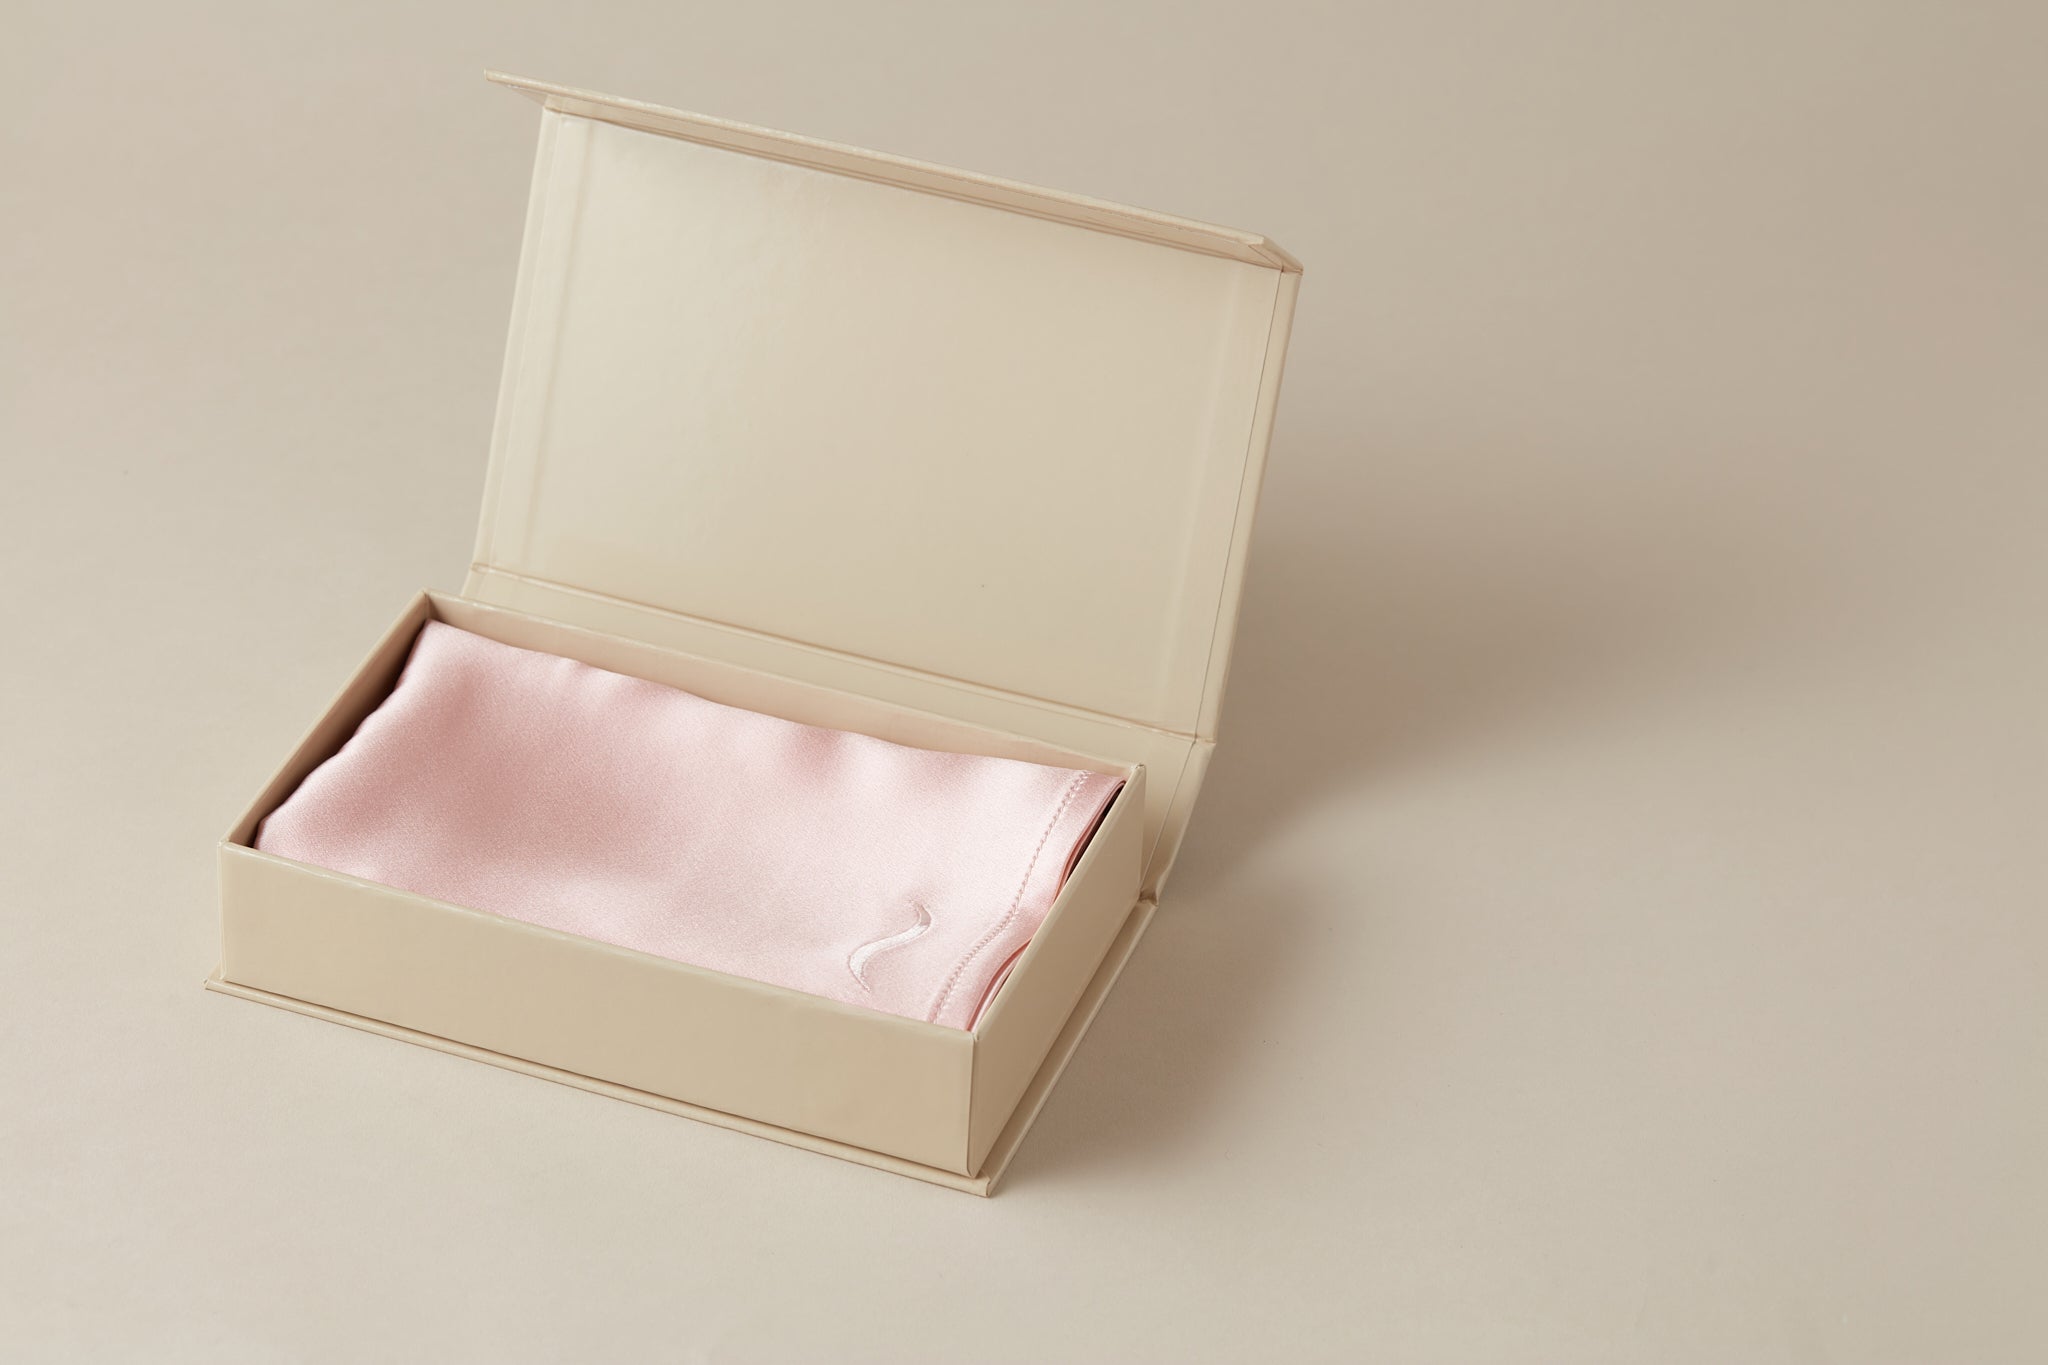 Pink Queen Envelope Pillowcase